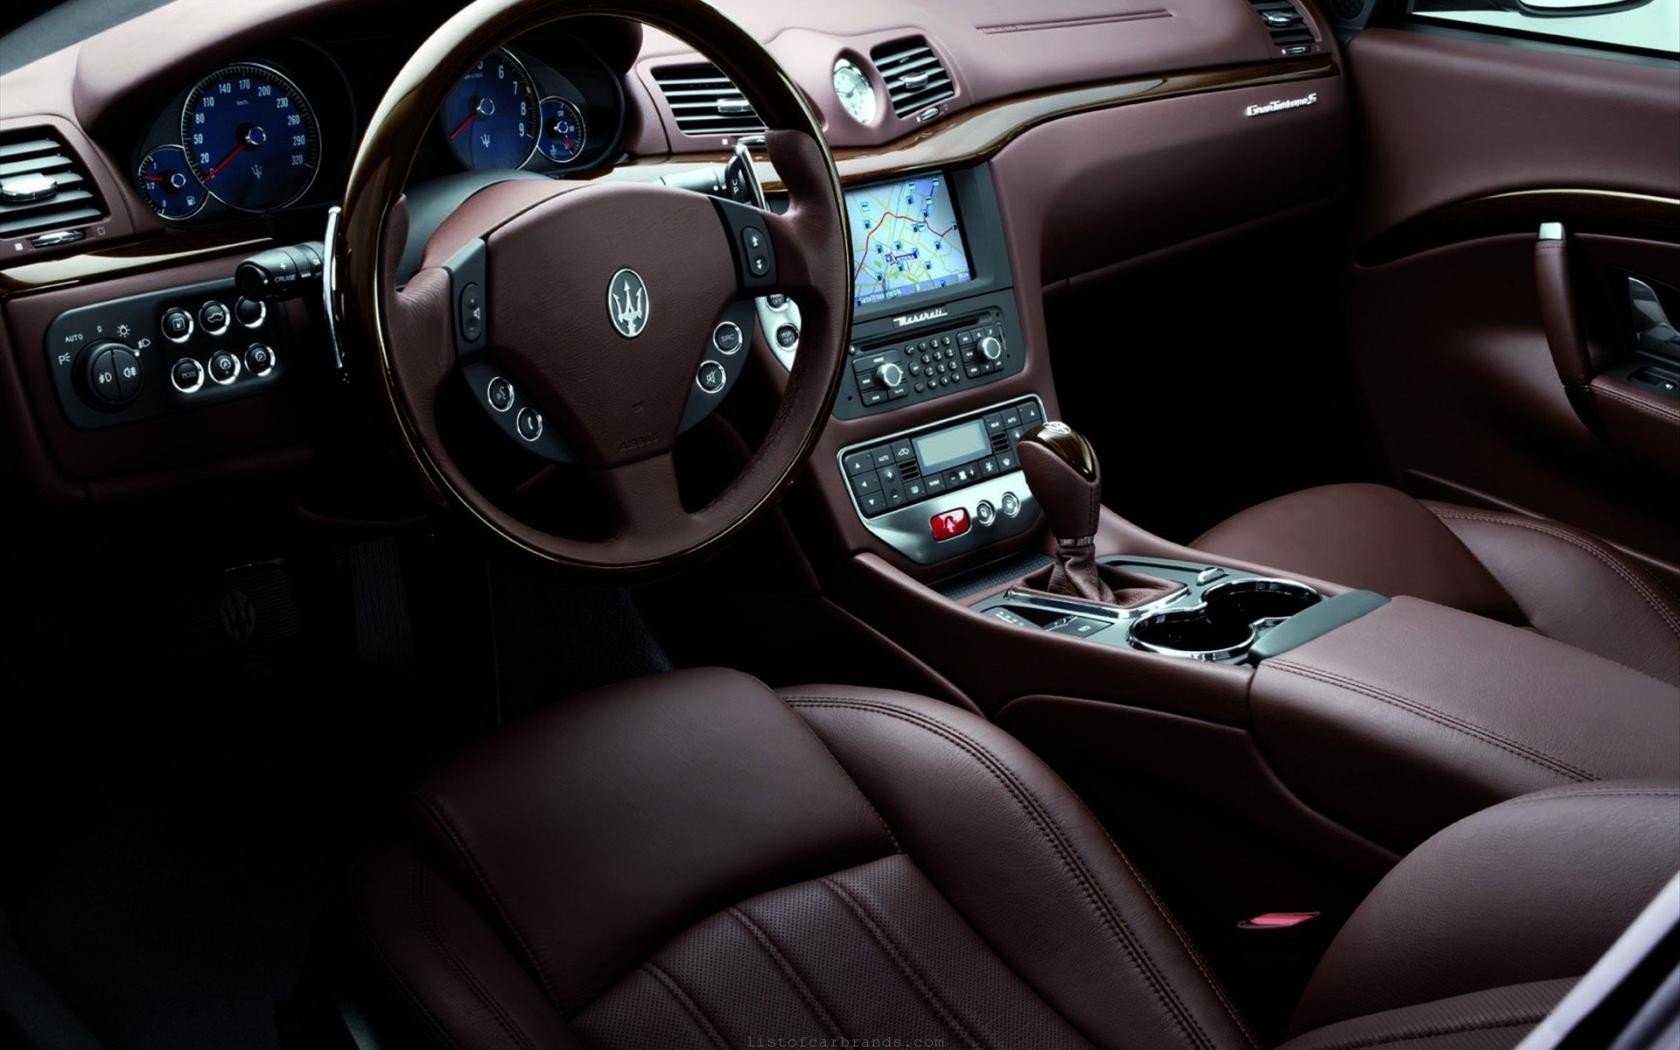 Best Maserati GranTurismo background ID:11027 for High Resolution hd 1680x1050 desktop